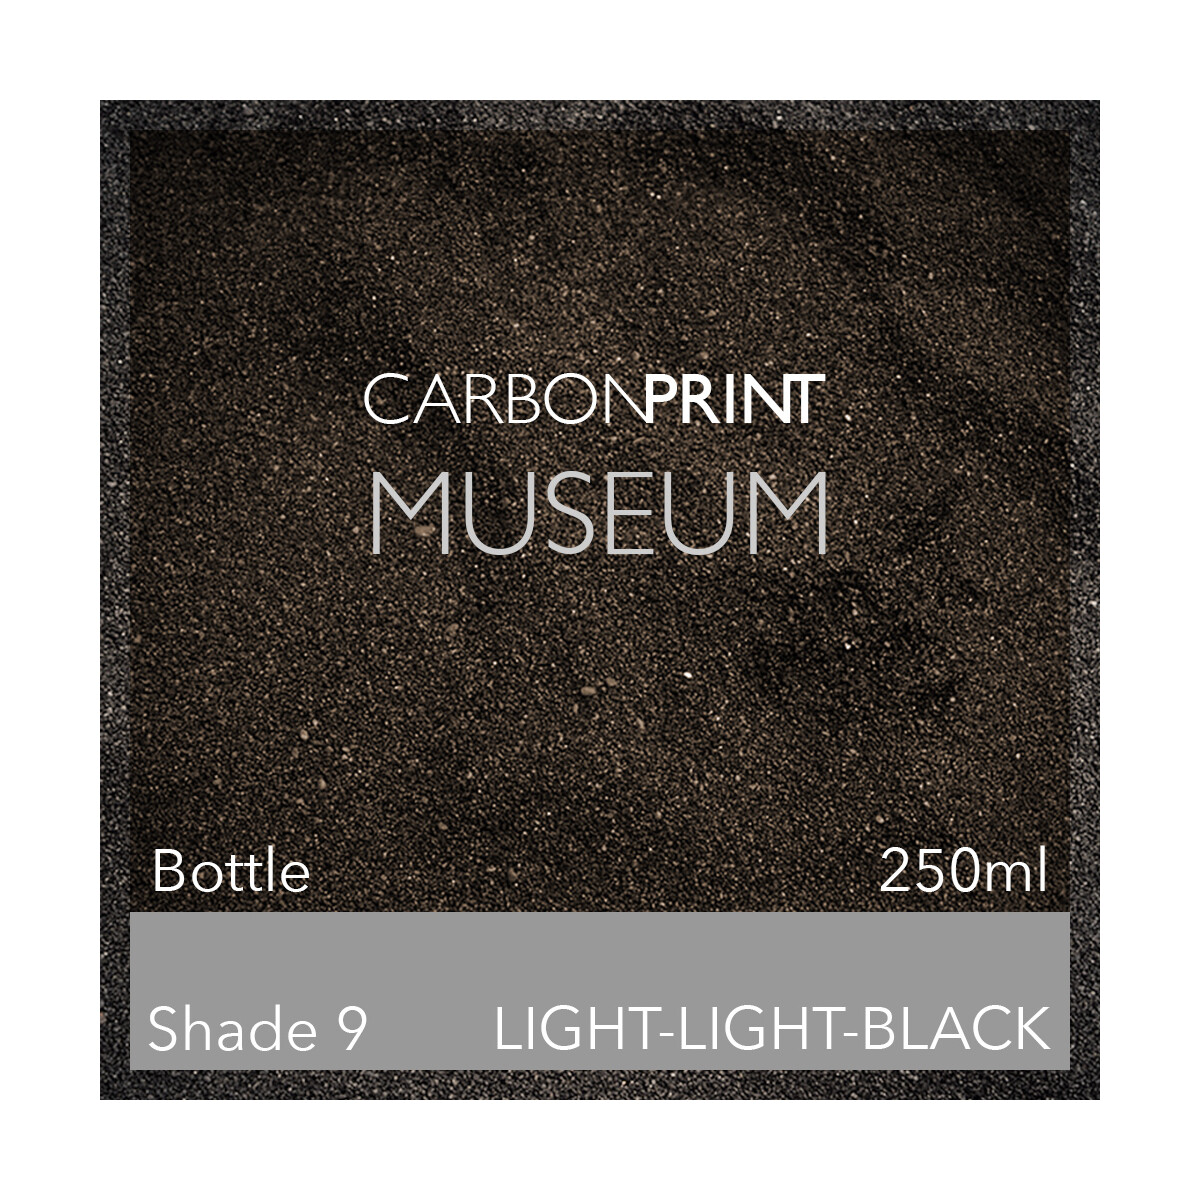 Carbonprint Museum Shade9 Channel LLK / LGY 250ml